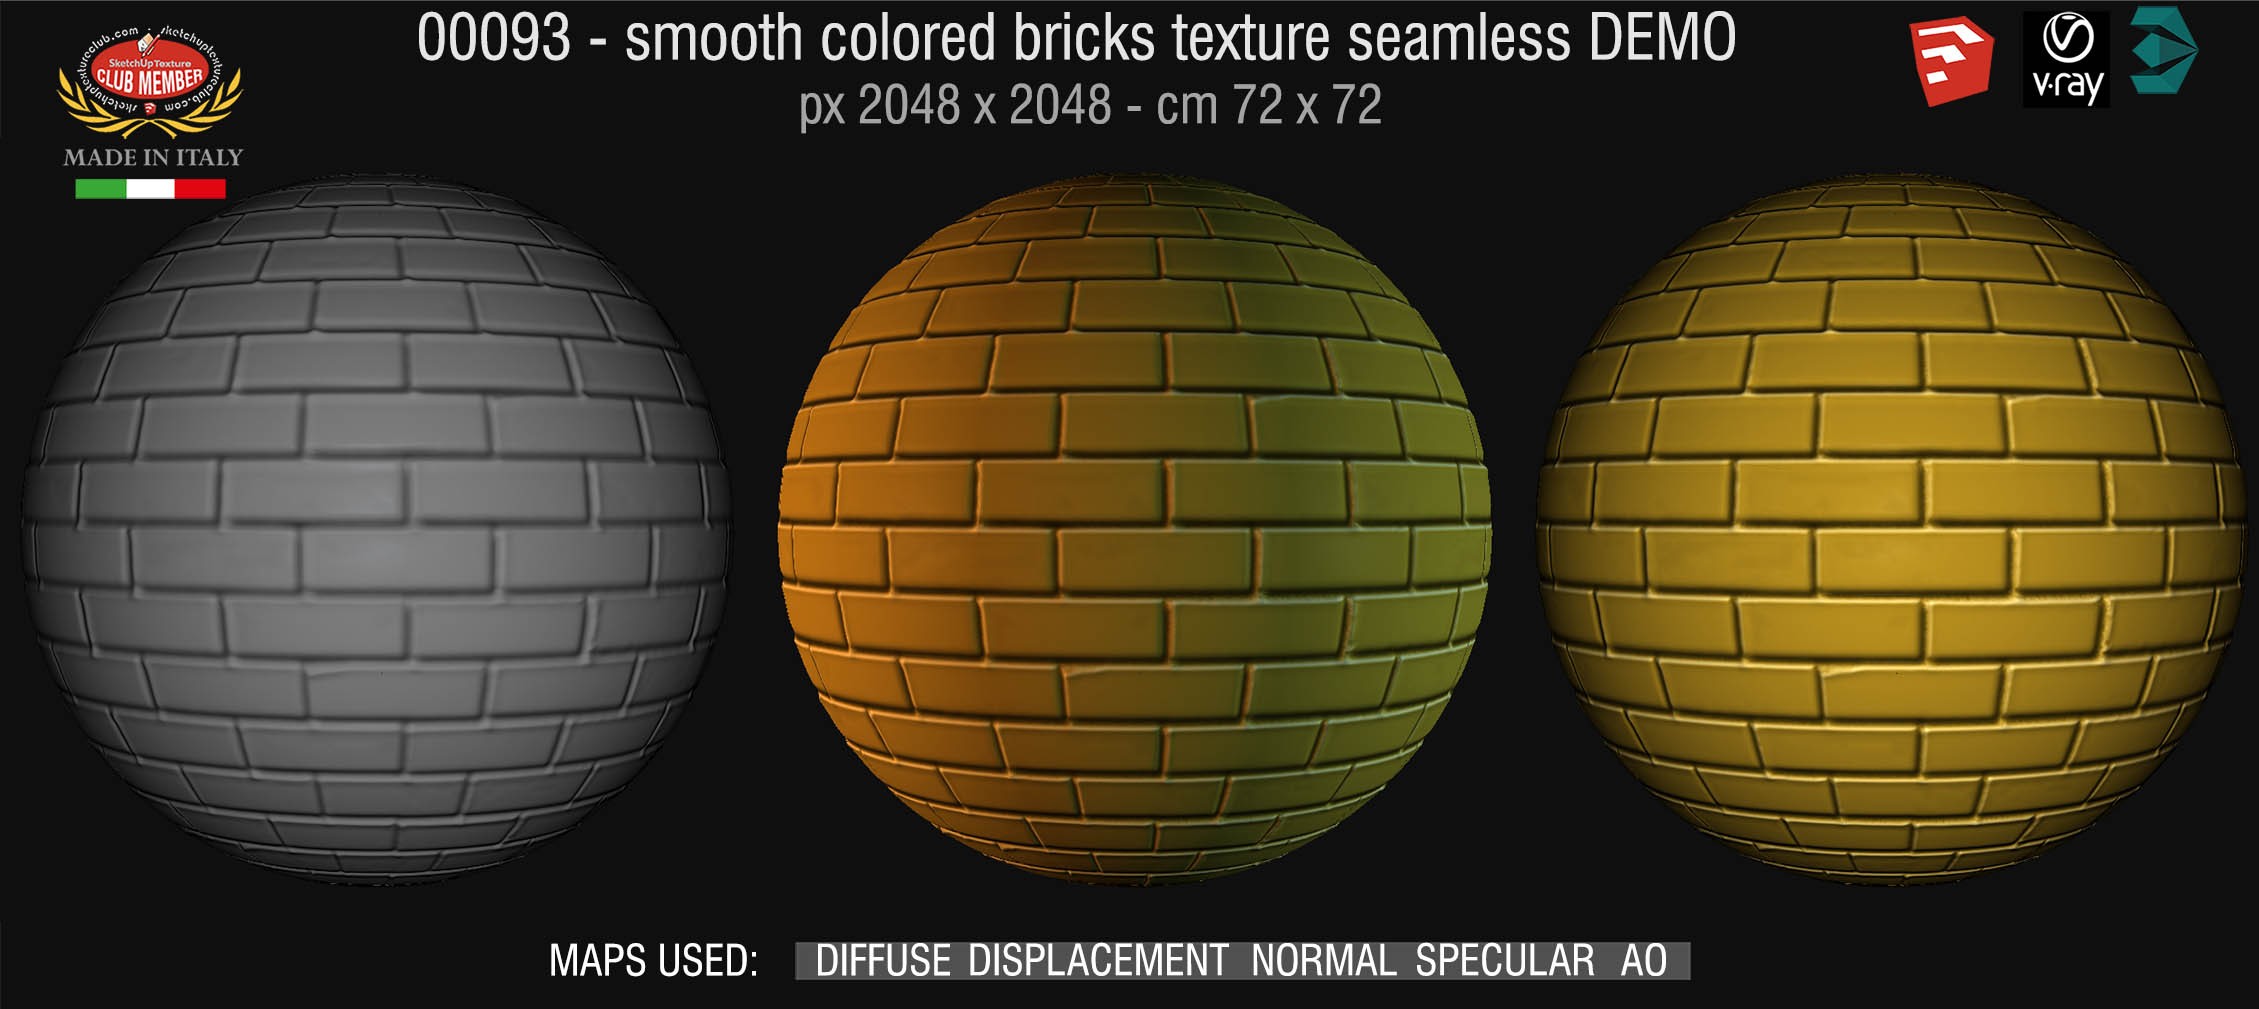 00093 smooth colored bricks texture seamless + maps DEMO